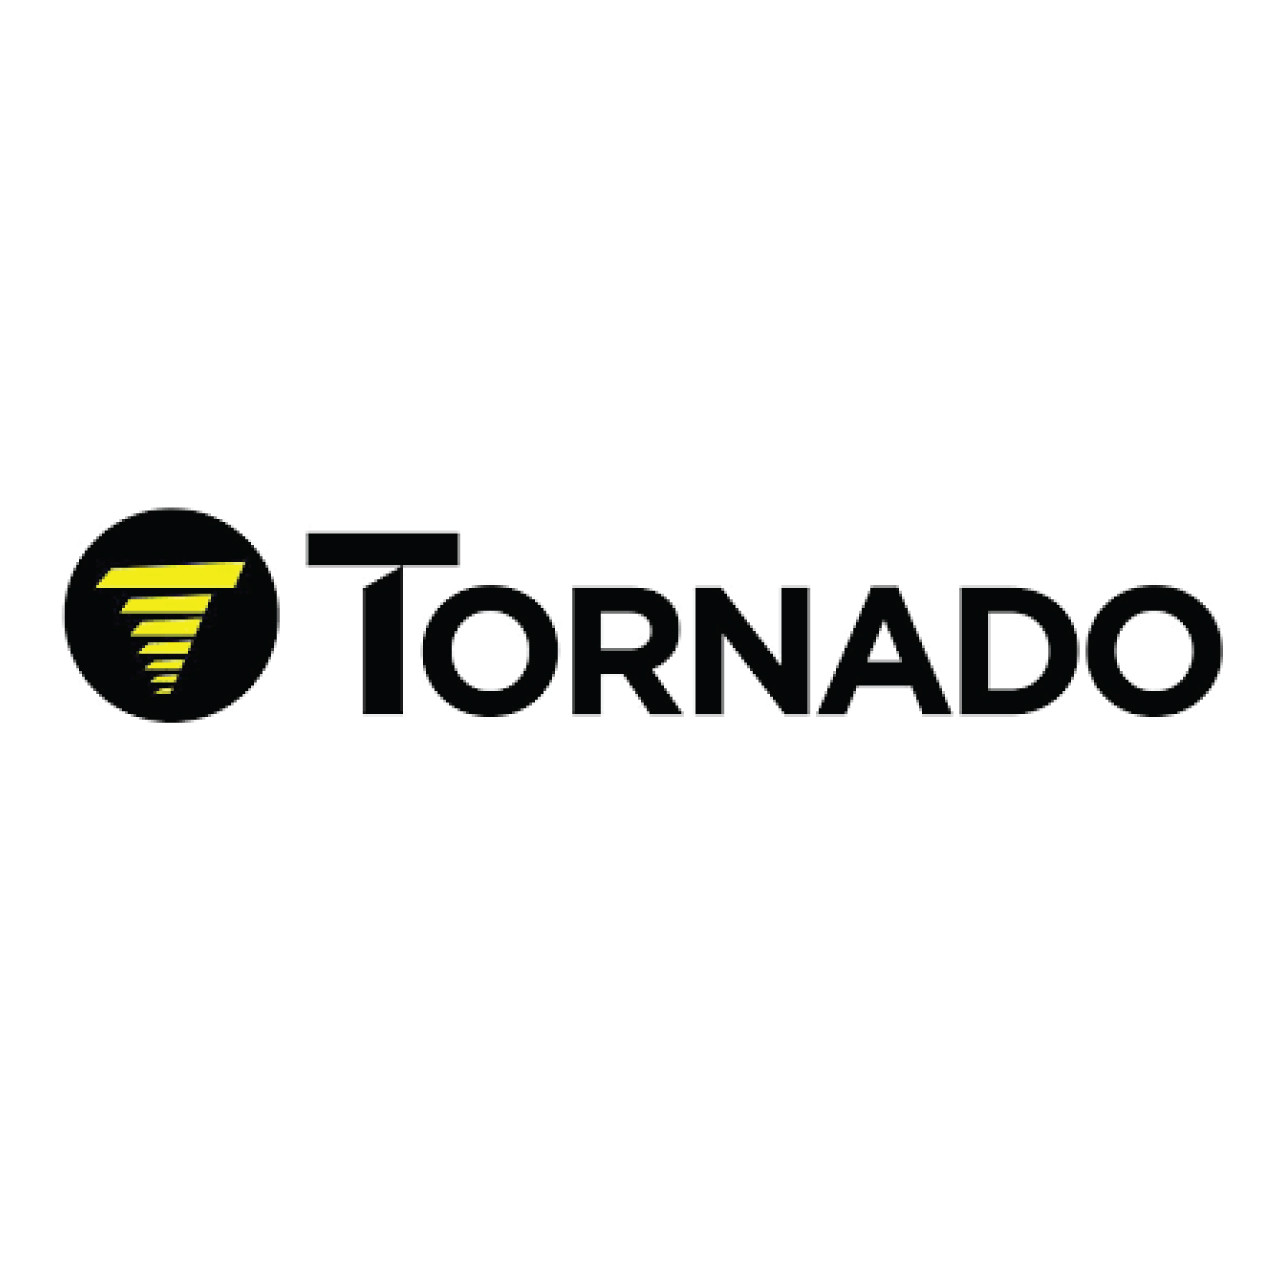 03-6001-0000, Tornado 03-6001-0000, Tornado HEAT SINK BRACKET 1.5MM THICK ALU. CLEAR ANODISE, Tornado parts